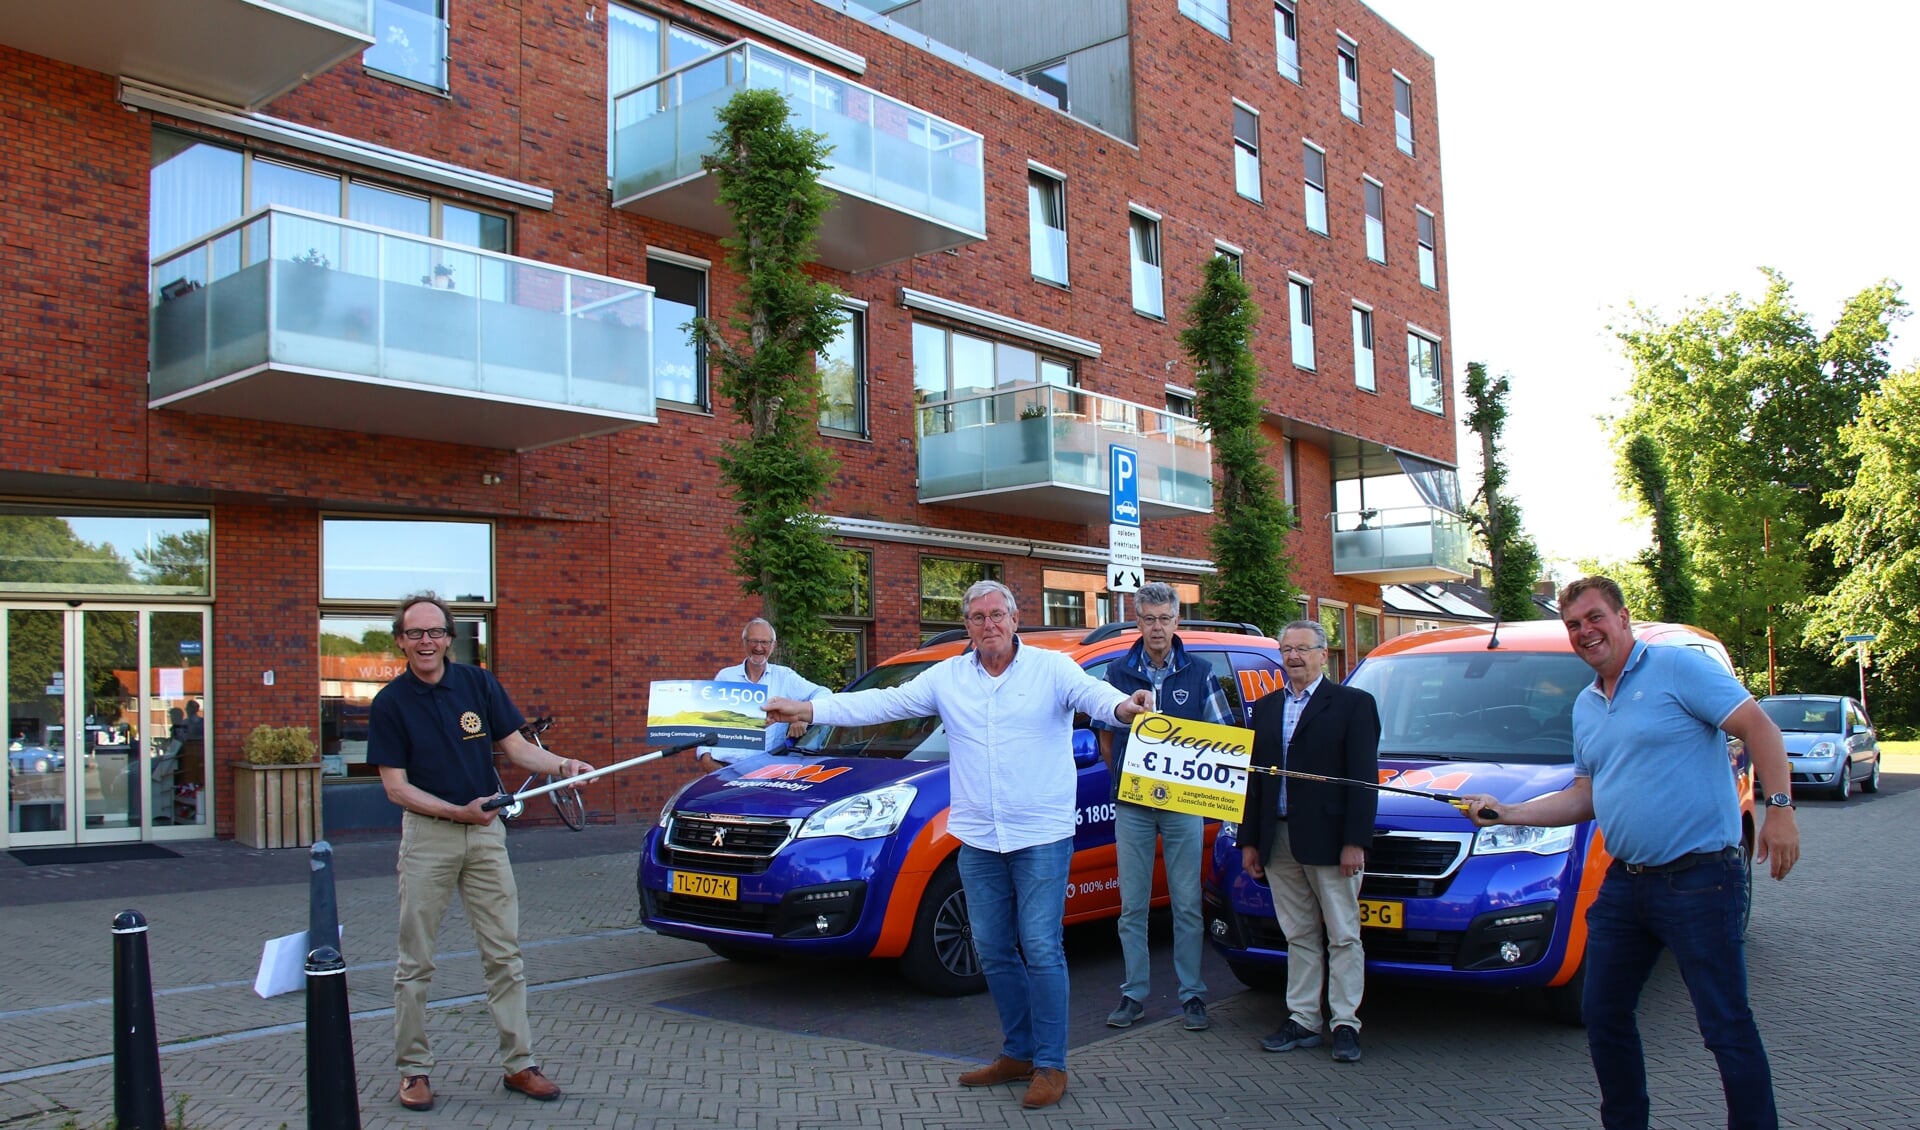 V.l.n.r.: Siebren Baars (Rotary), Bert Nijboer (chauffeur BurgumMobyl), Peter van de Hoef (voorzitter Burgummobyl), Theo de Vries (chauffeur BurgumMobyl), Appie de Zwart (planning BurgumMobyl) en Evert Hoekstra (Lionsclub).